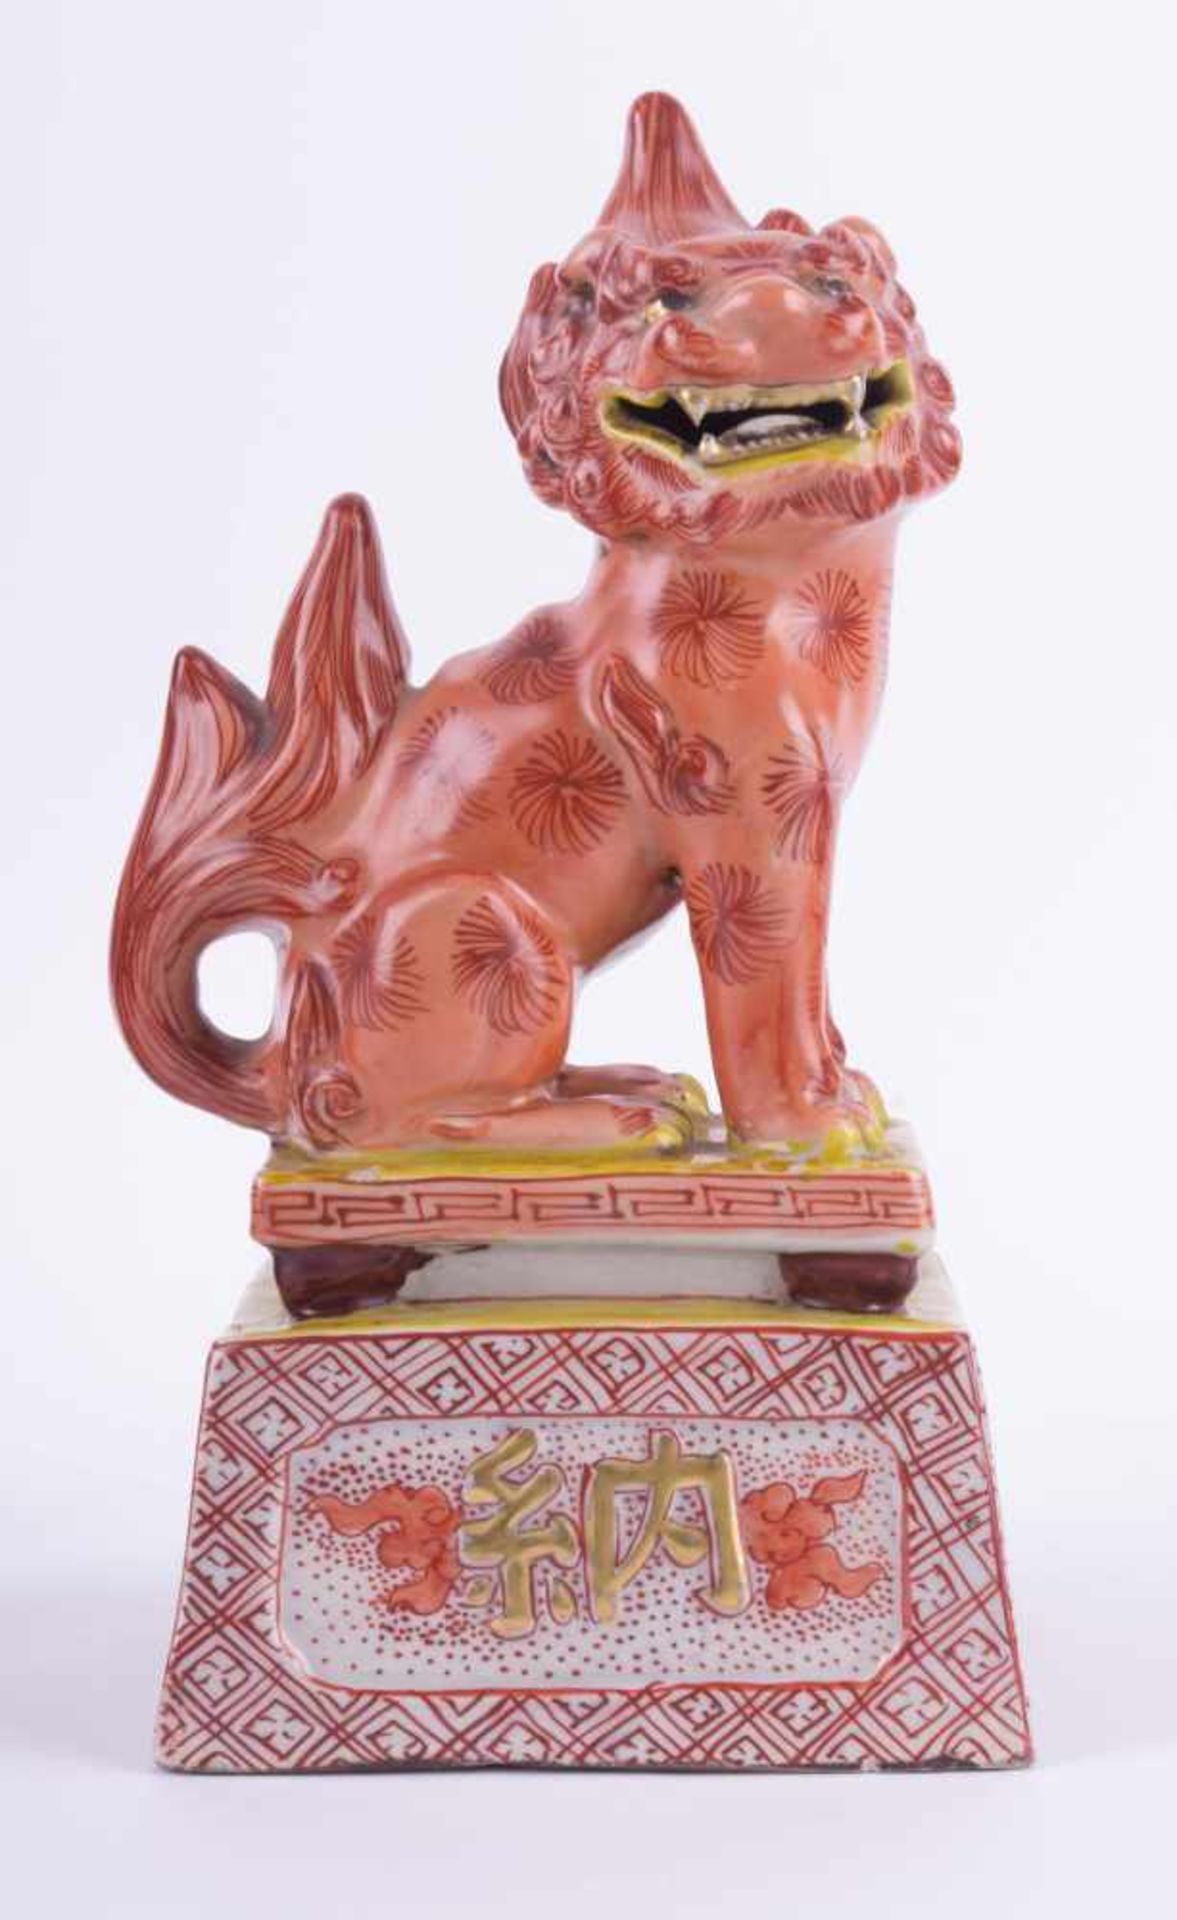 Tempellöwe China 19./20. Jhd. Keramik, farbig und goldstaffiert, H: 23,5 cm Temple lion China 19th/